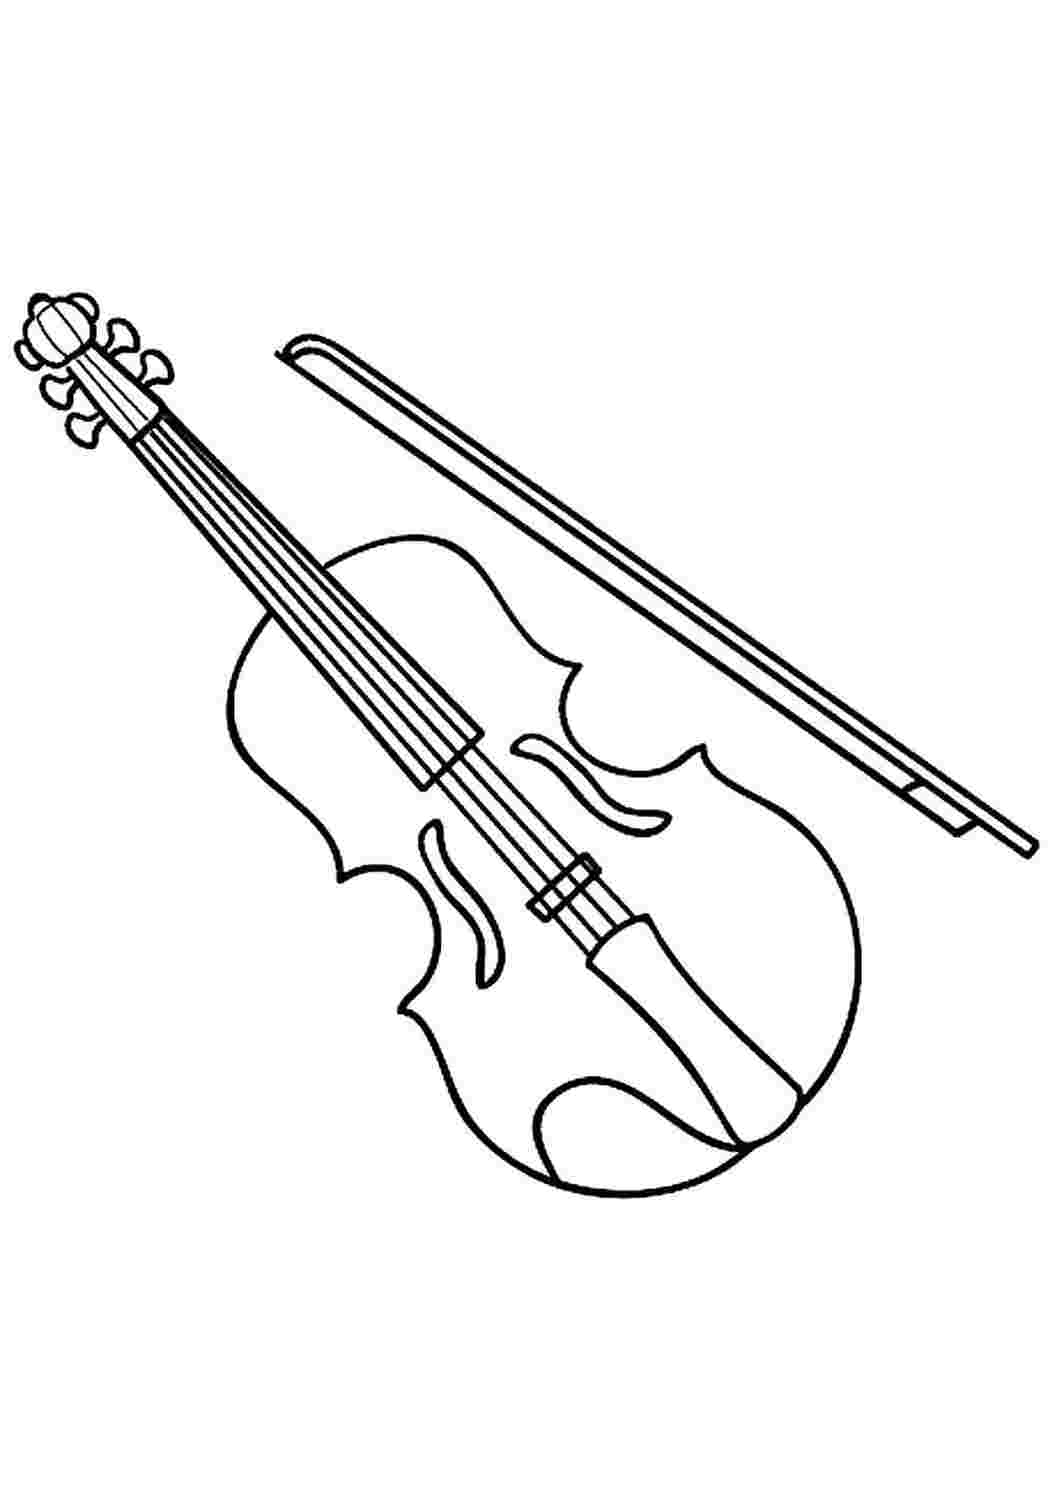 Раскраска скрипка